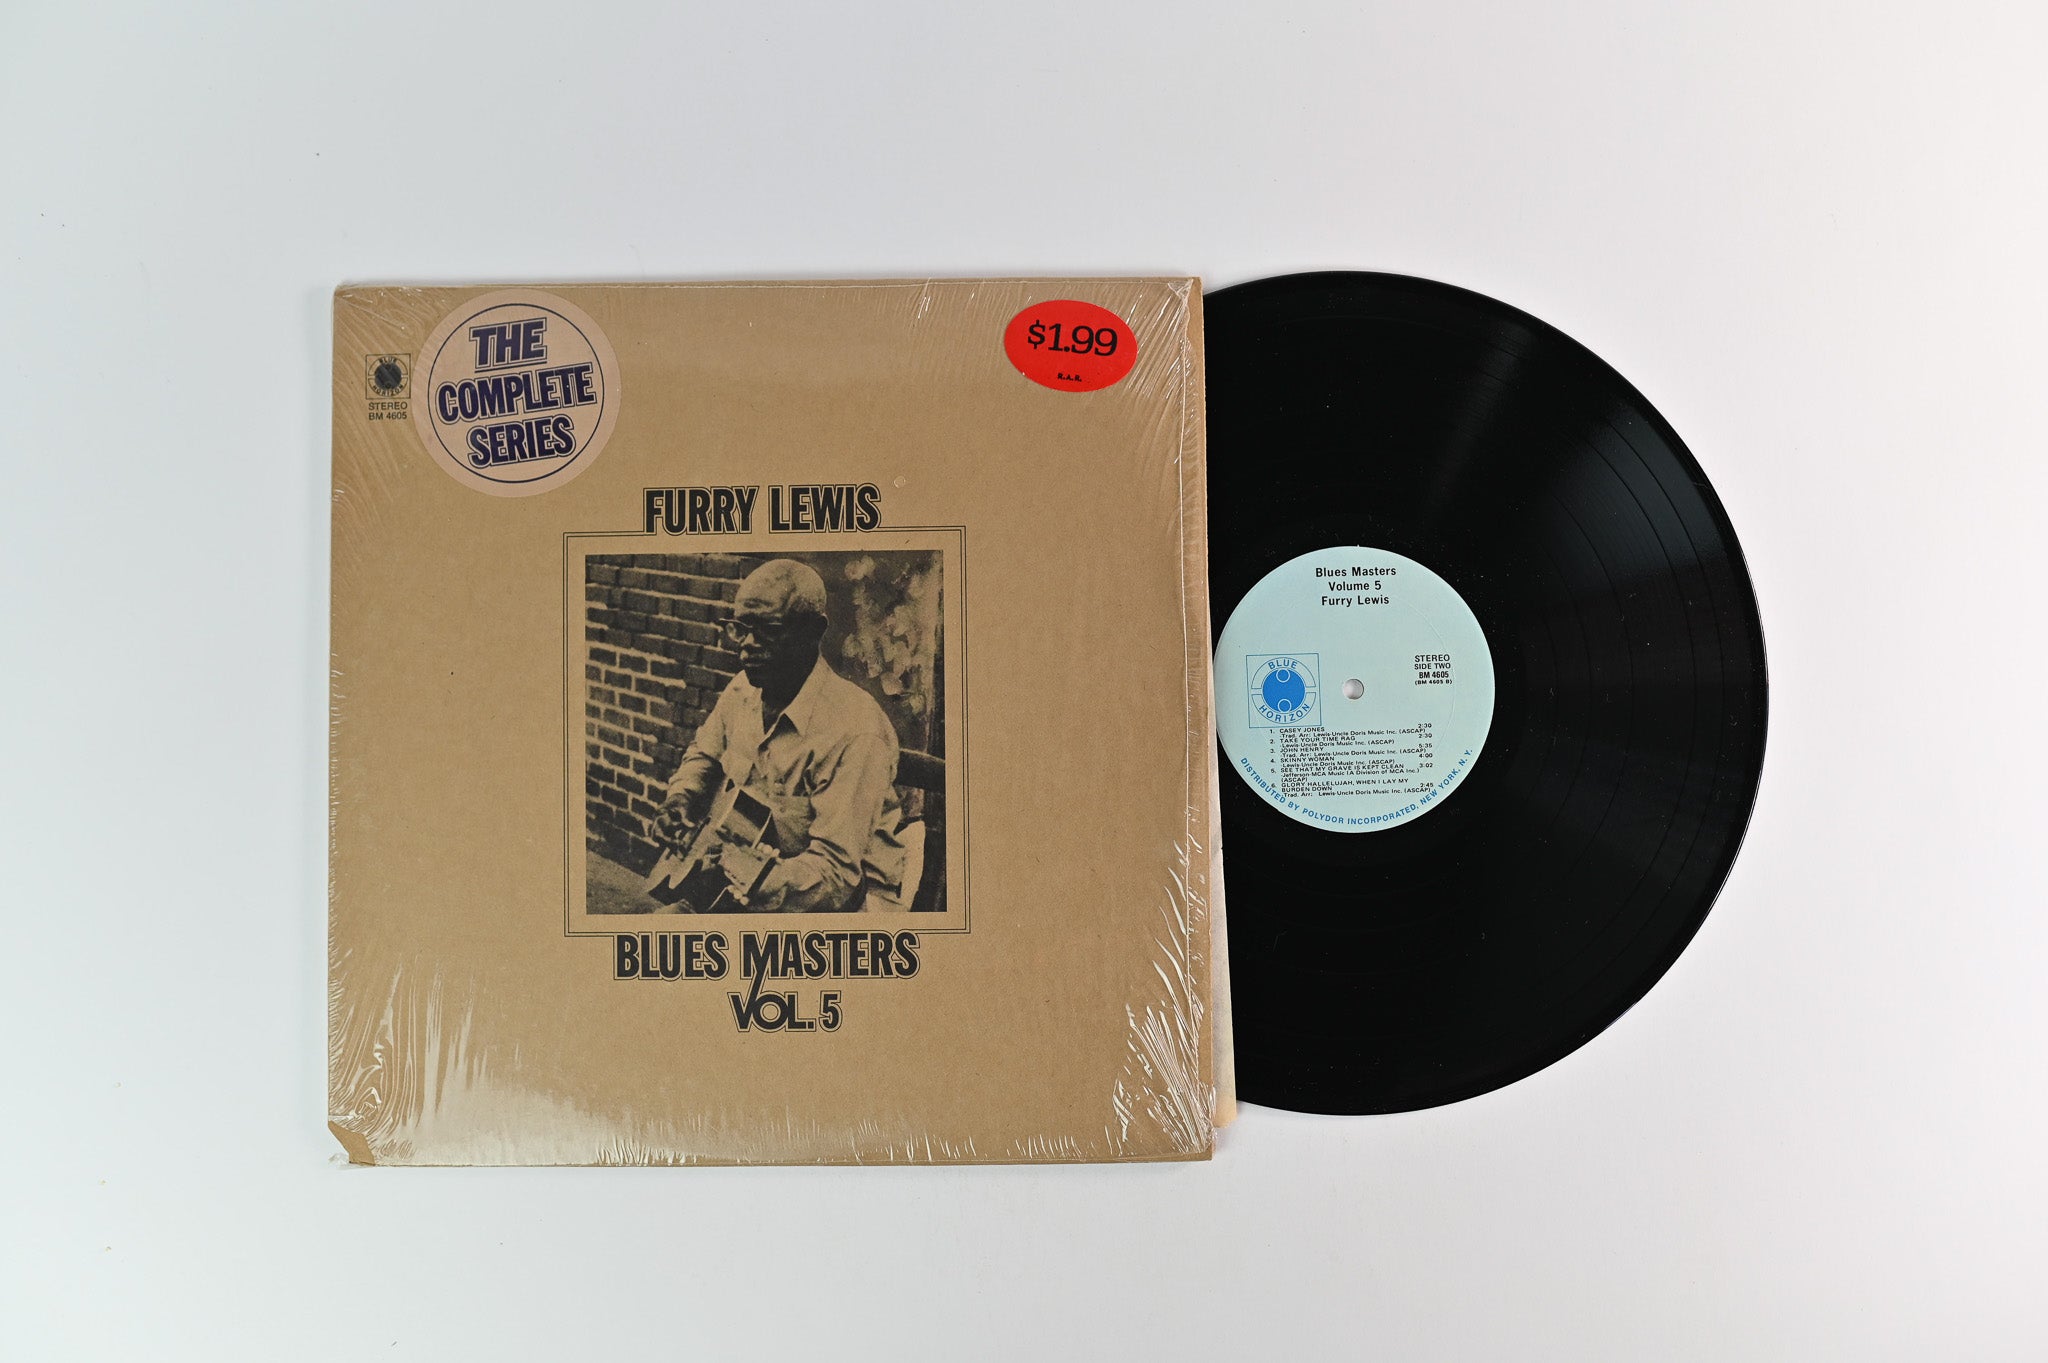 Furry Lewis - Blues Masters Vol. 5 on Blue Horizon